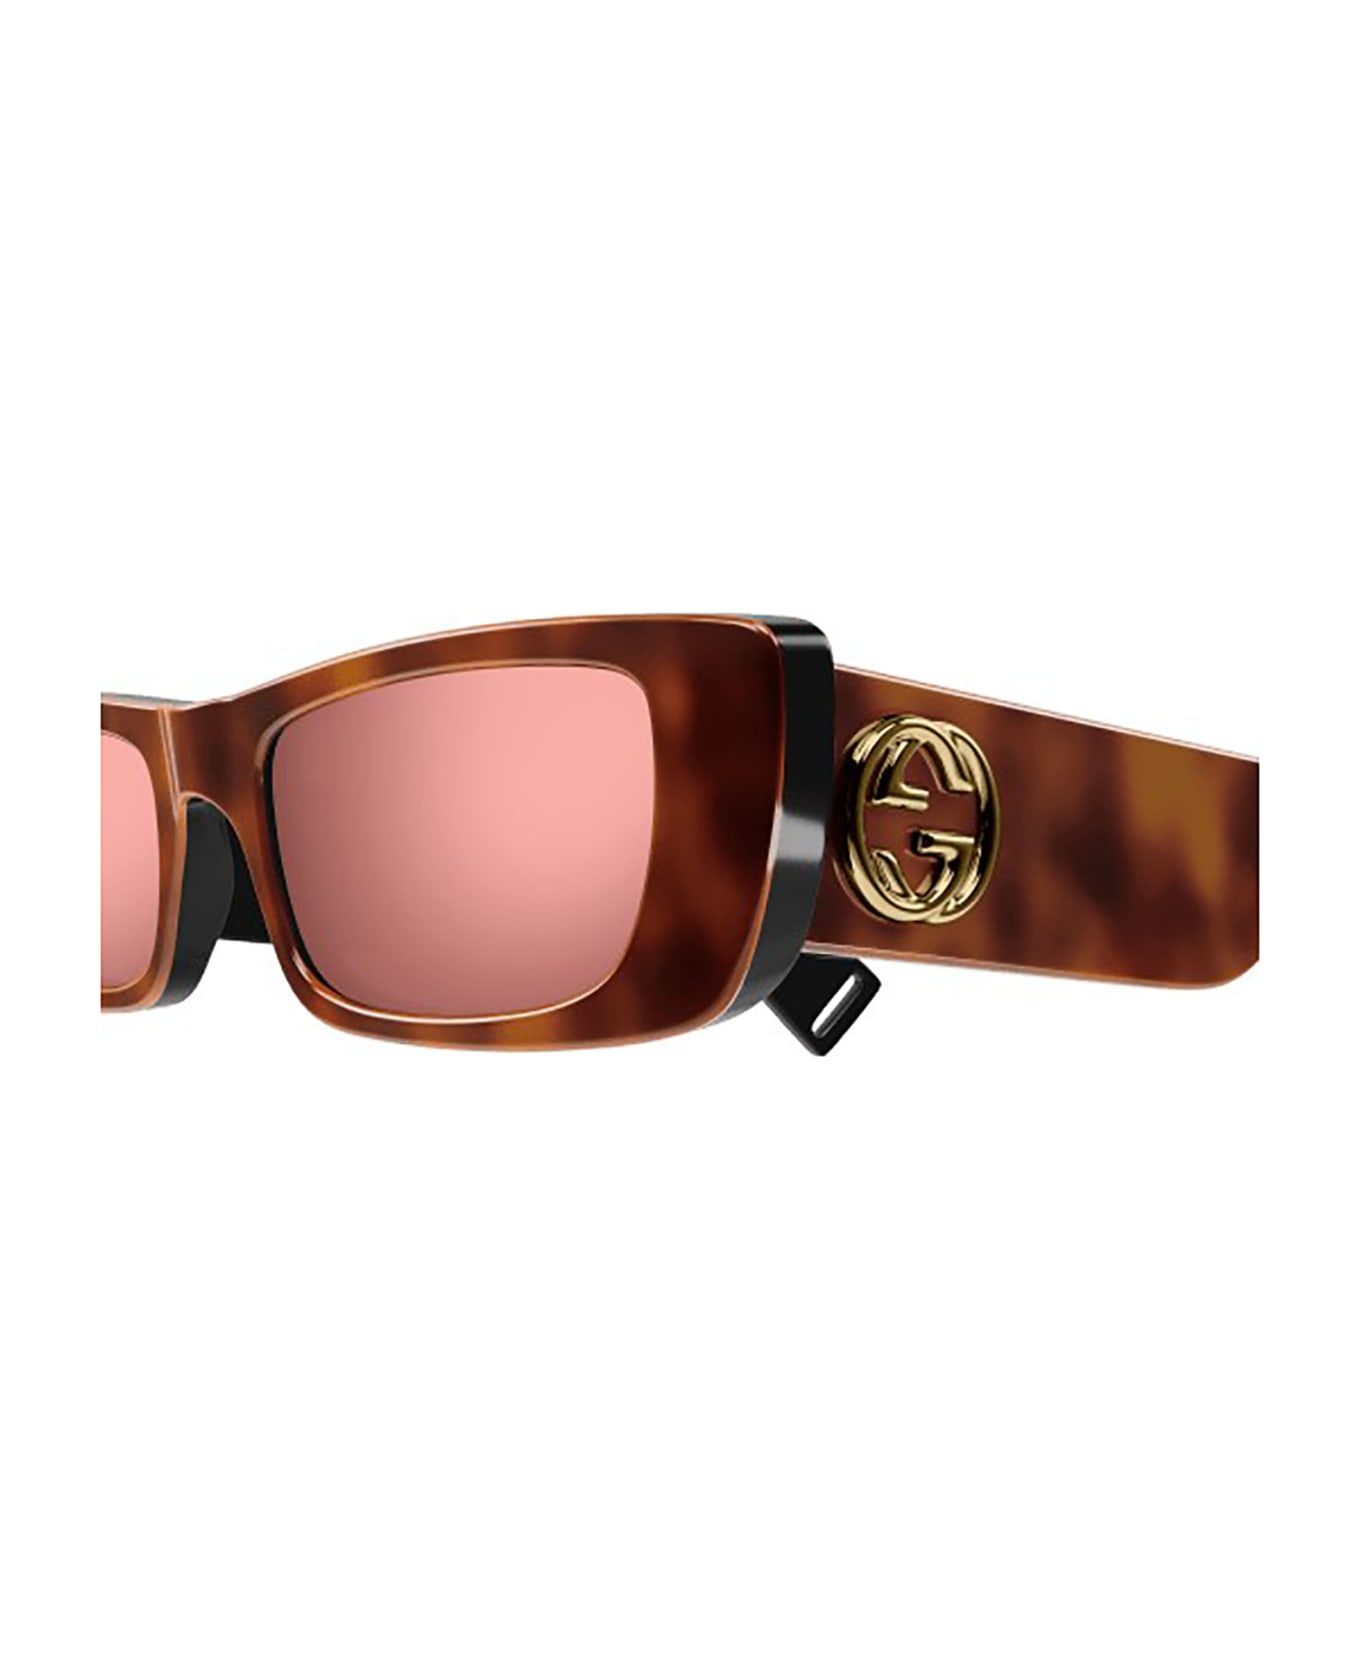 Gucci Eyewear Gg0516s Sunglasses - 015 havana havana red